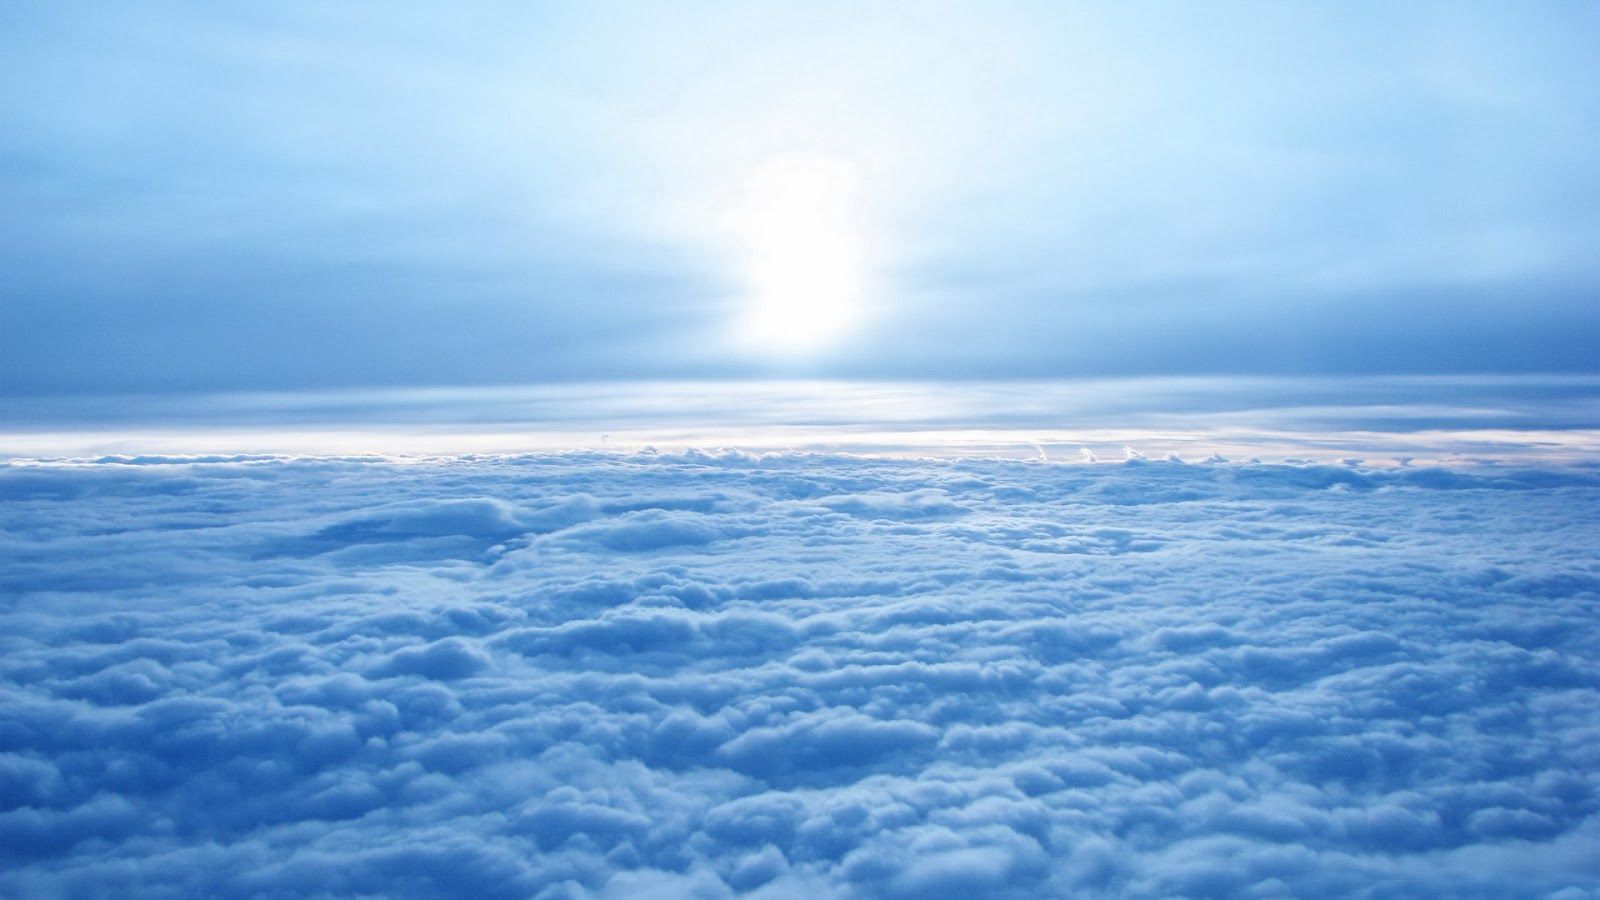 Nature Image Wallpaper: Best Sky Clouds Widescreen HD Image Wallpaper for Desktop